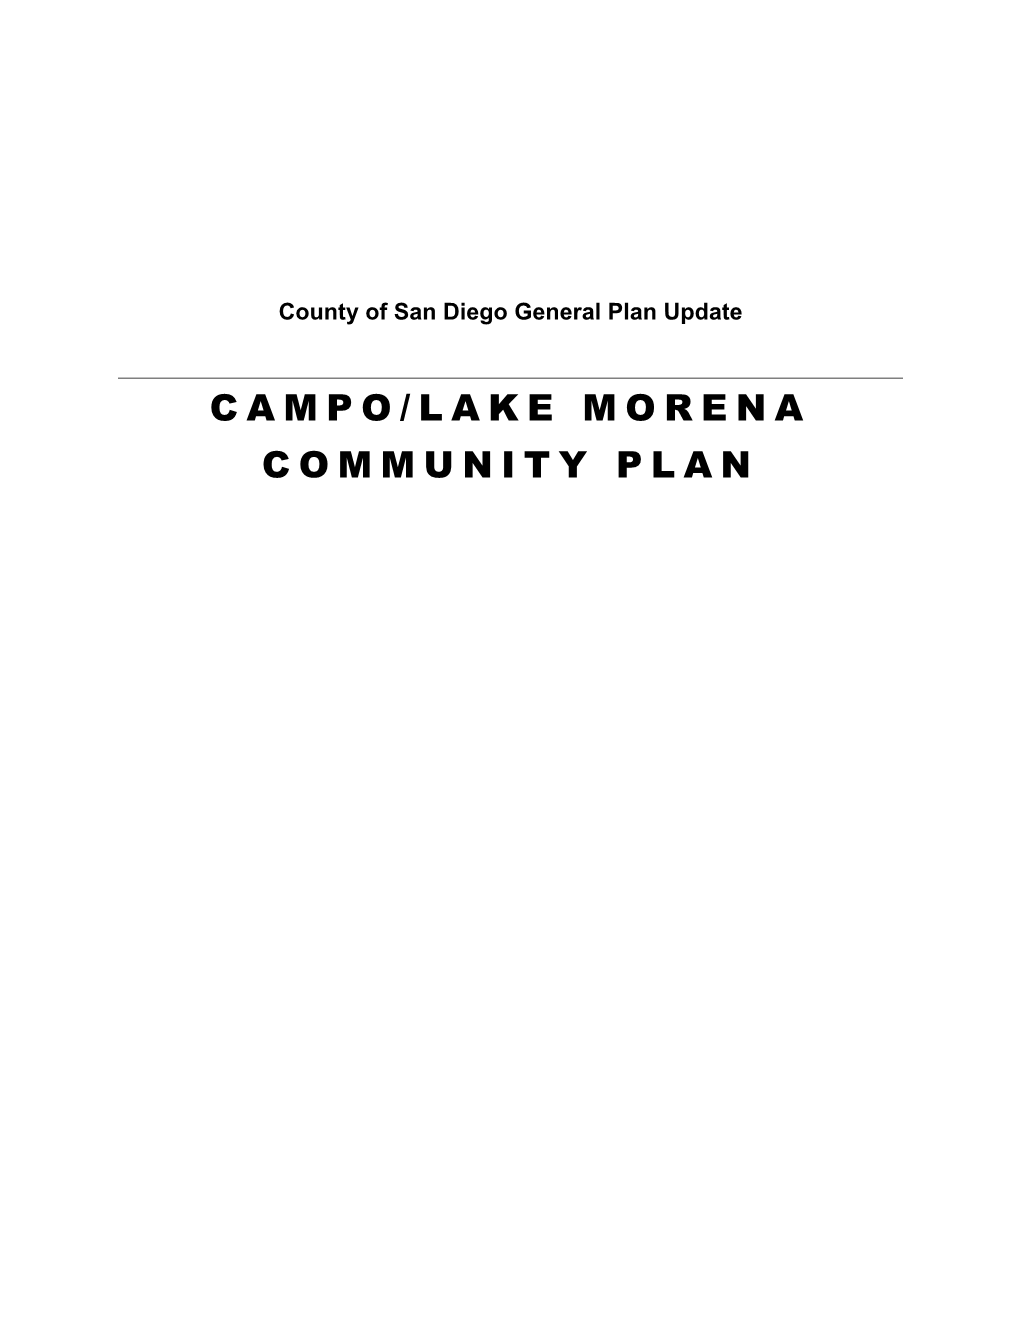 Campo/Lake Morena Community Plan